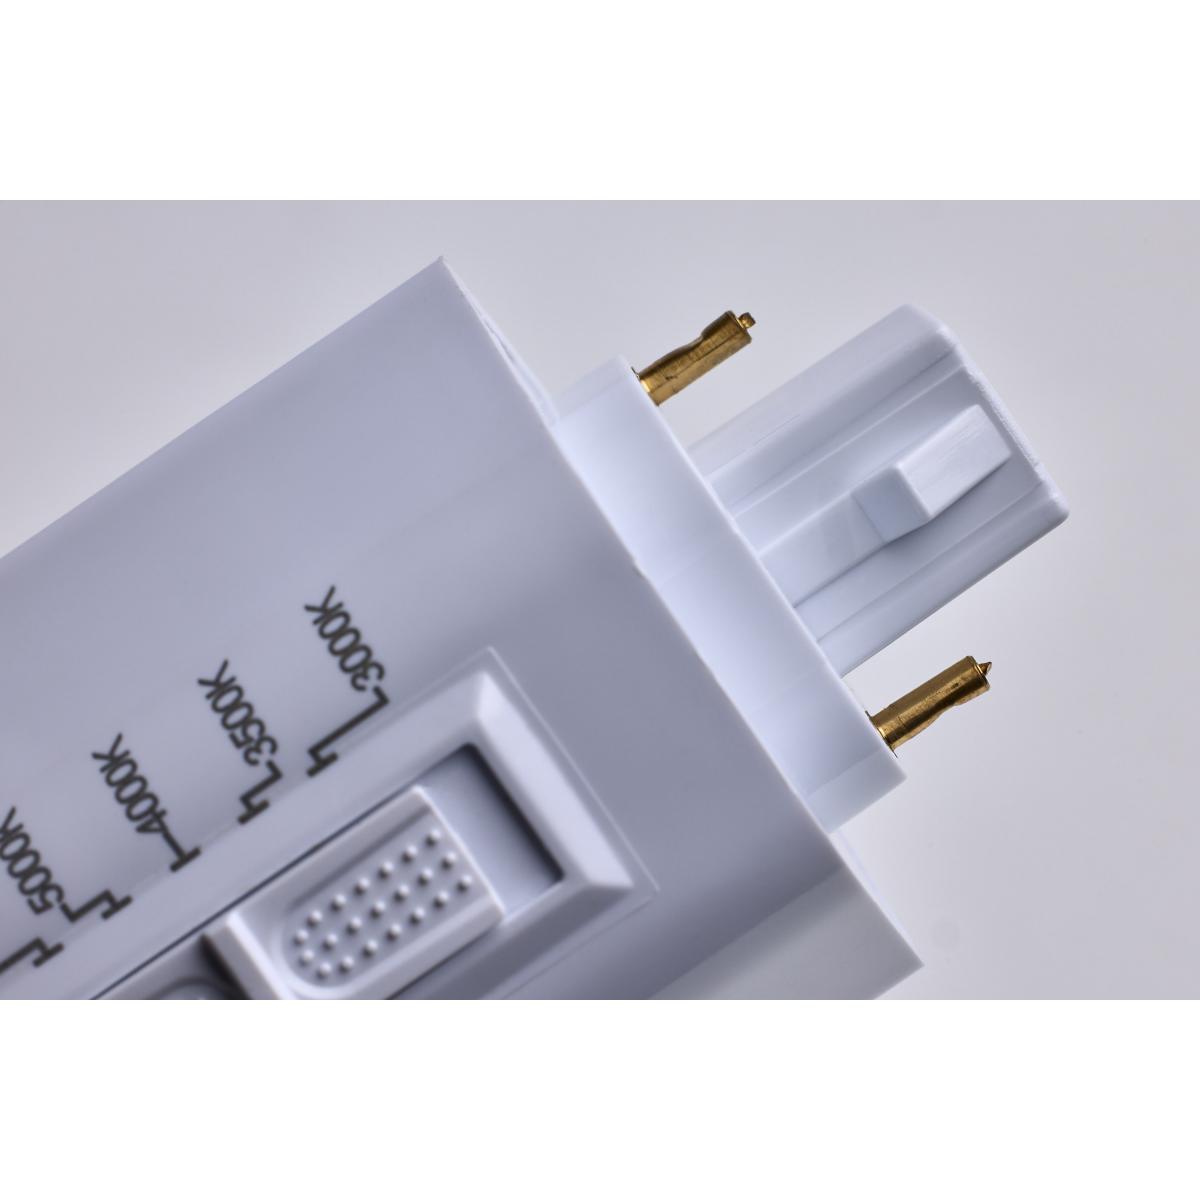 2 pin PL LED Bulb, 22 Watt, 2860 Lumens, Selectable CCT 3000K to 6500K, Universal, Replaces 42W CFL, G24d Base, Type B Ballast Bypass